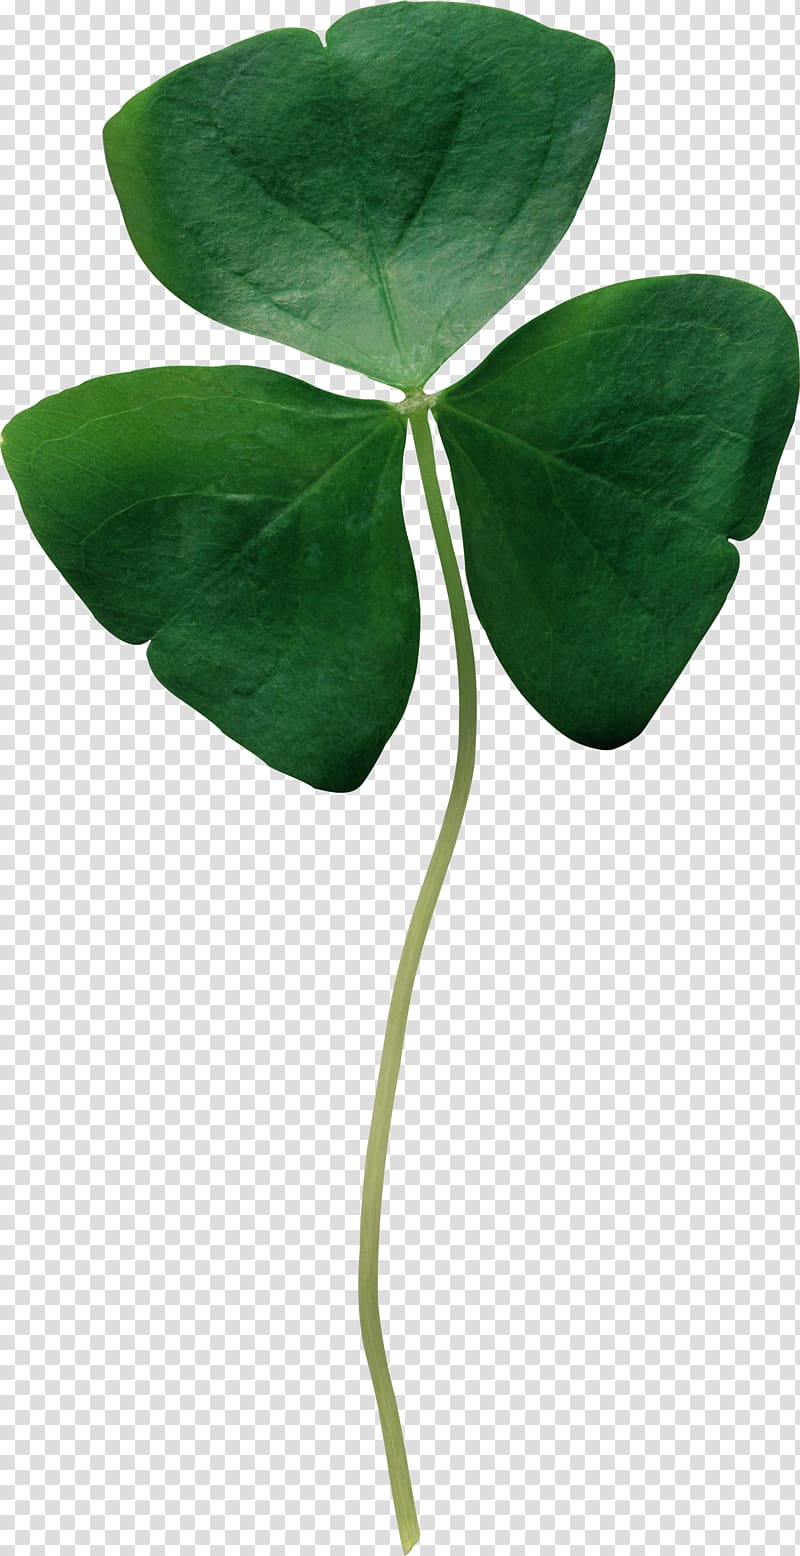 Republic of Ireland Shamrock Four-leaf clover Saint Patrick\'s Day, clover transparent background PNG clipart